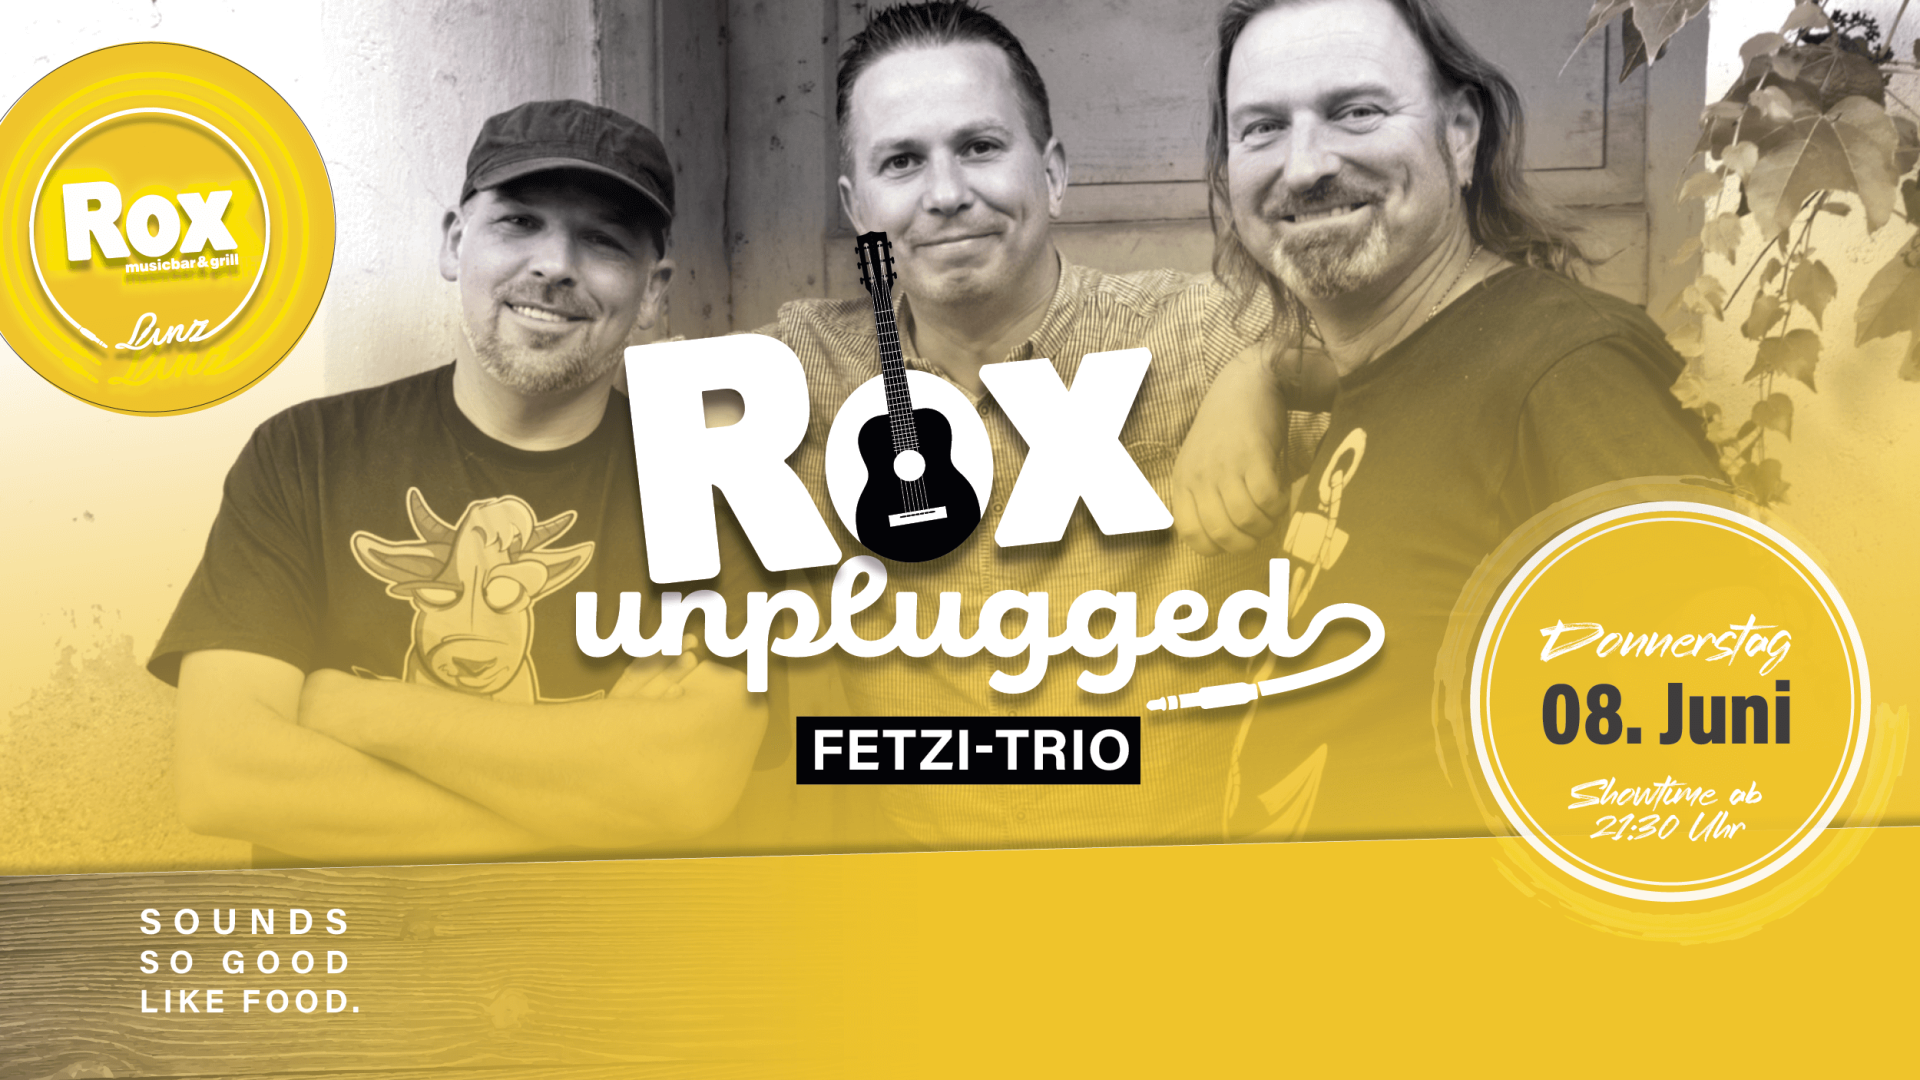 ROX Linz unplugged Fetzi Trio